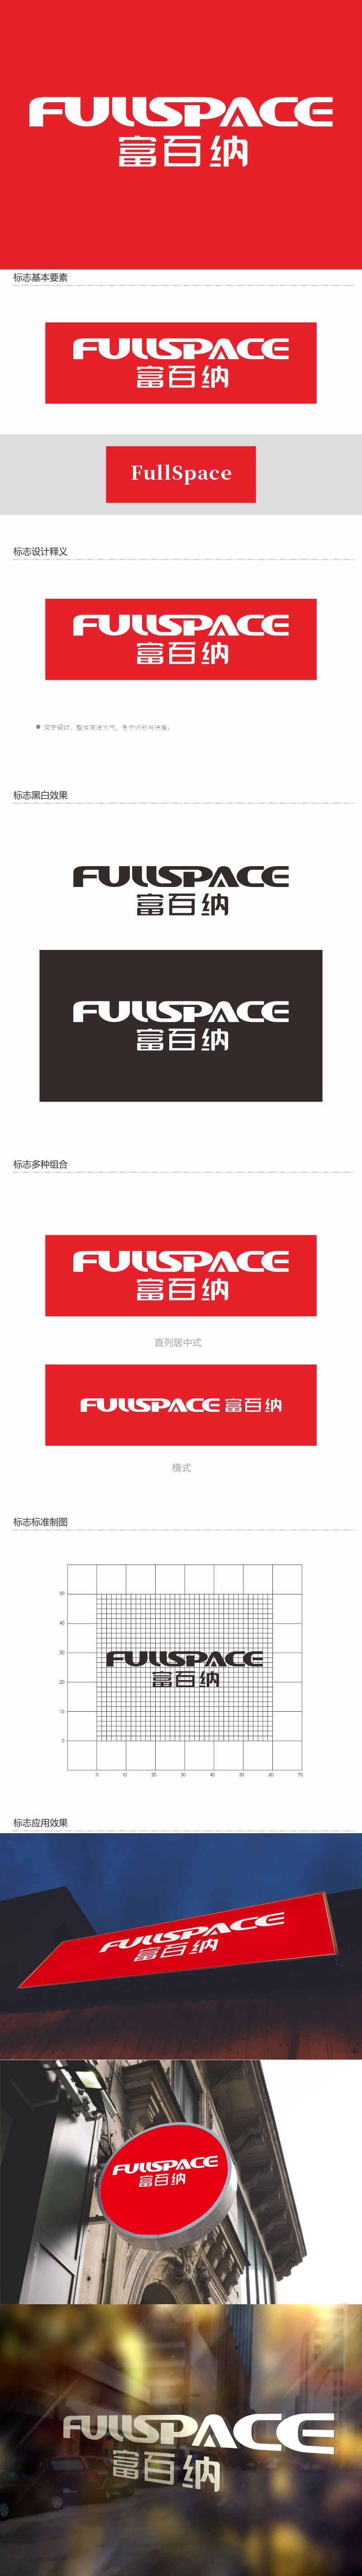 何嘉健的FullSpace富百纳logo设计